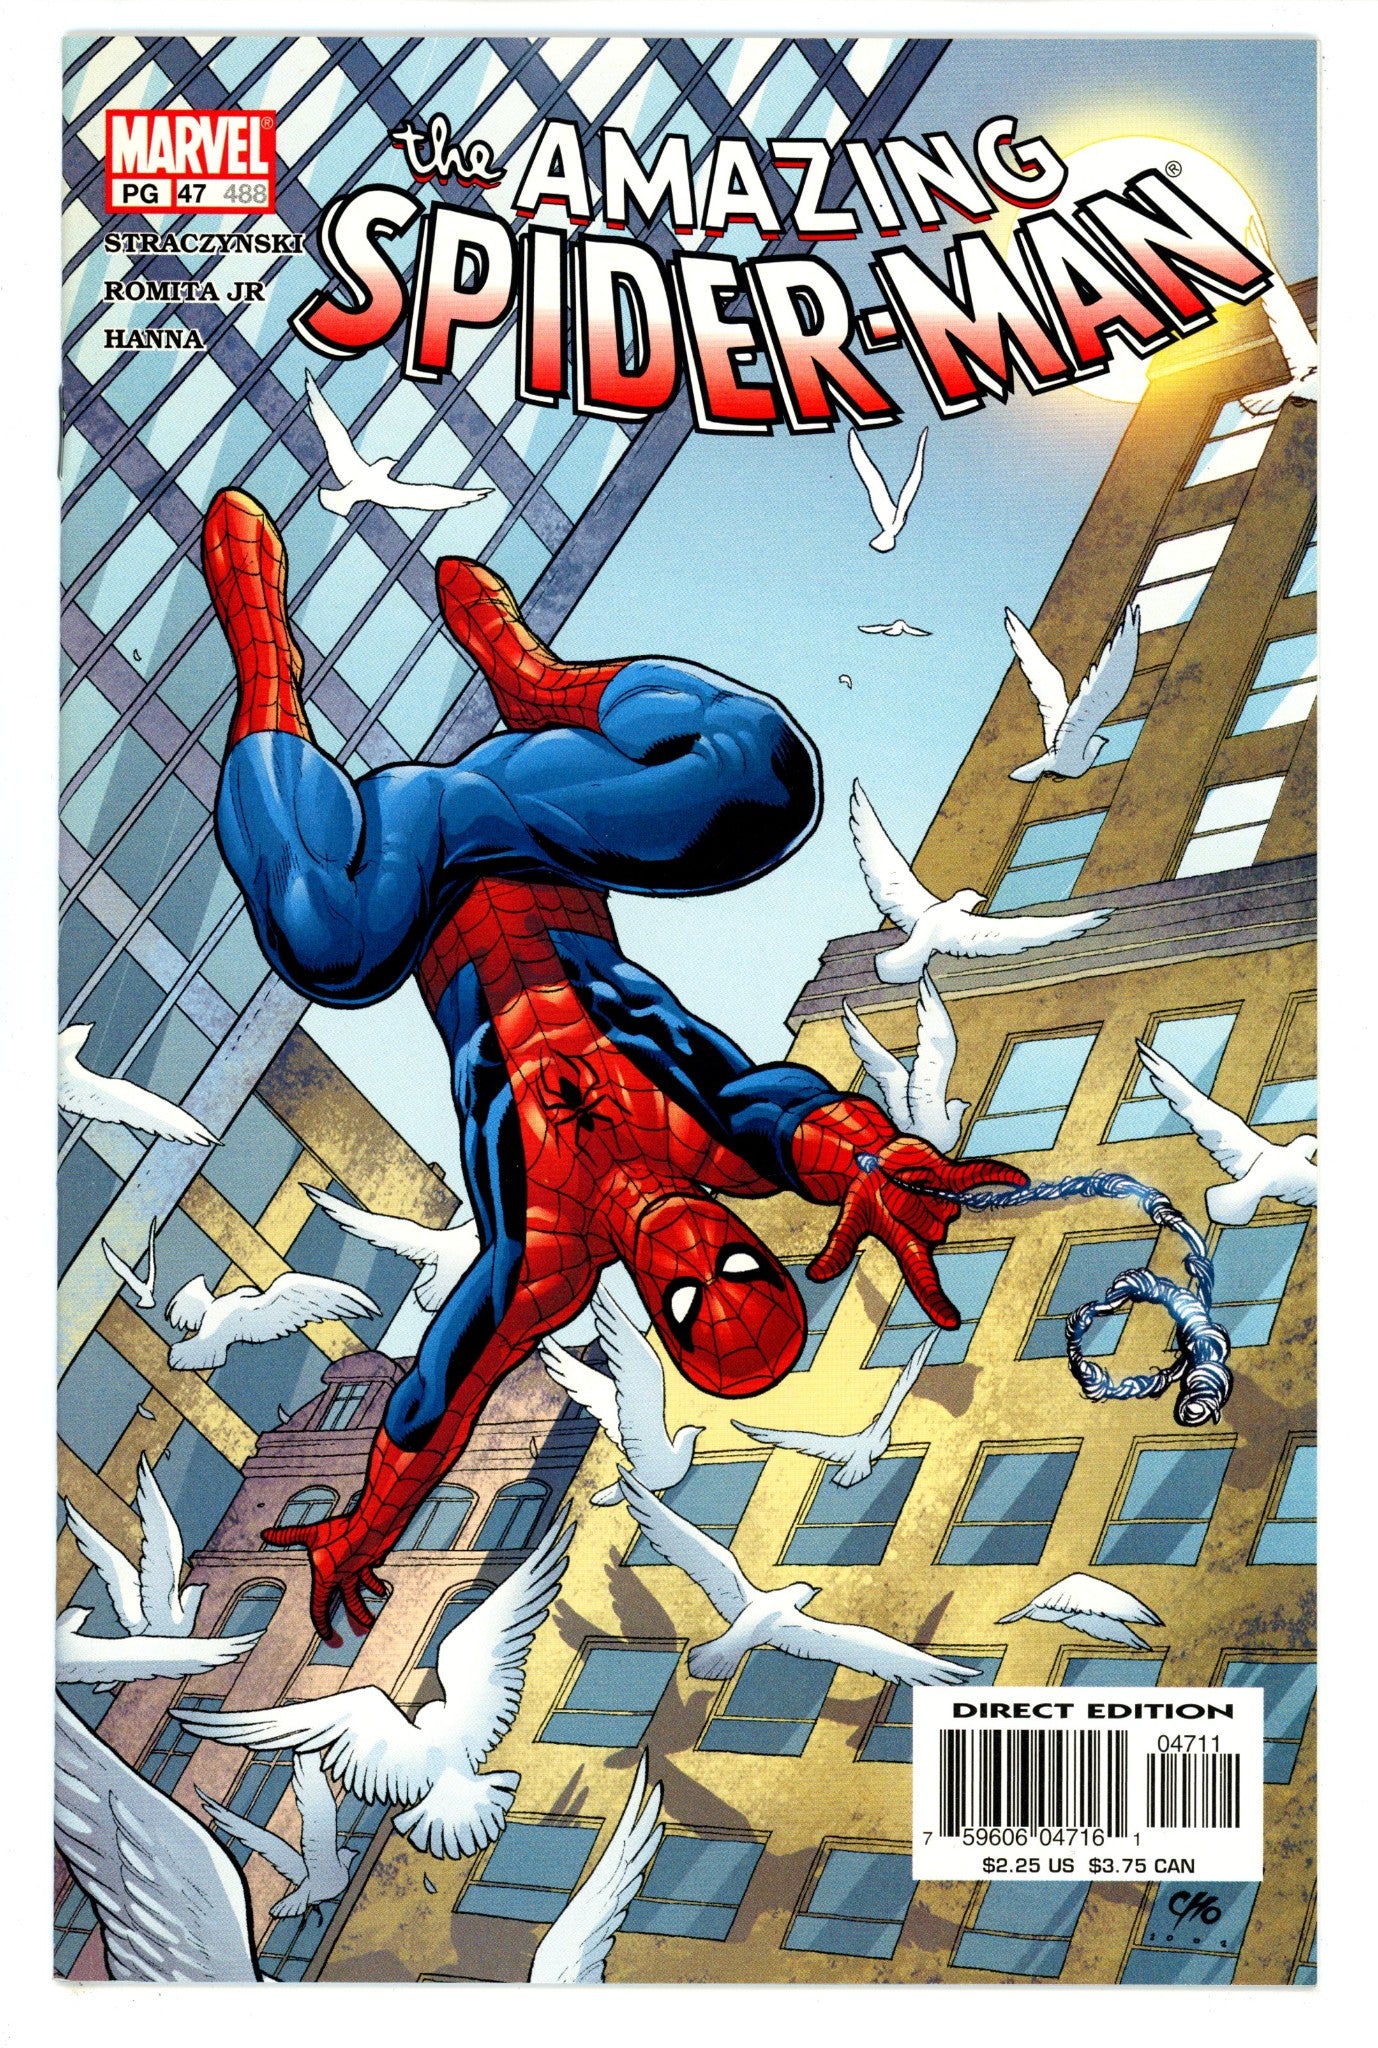 The Amazing Spider-Man Vol 2 47 (488) High Grade (2003) 